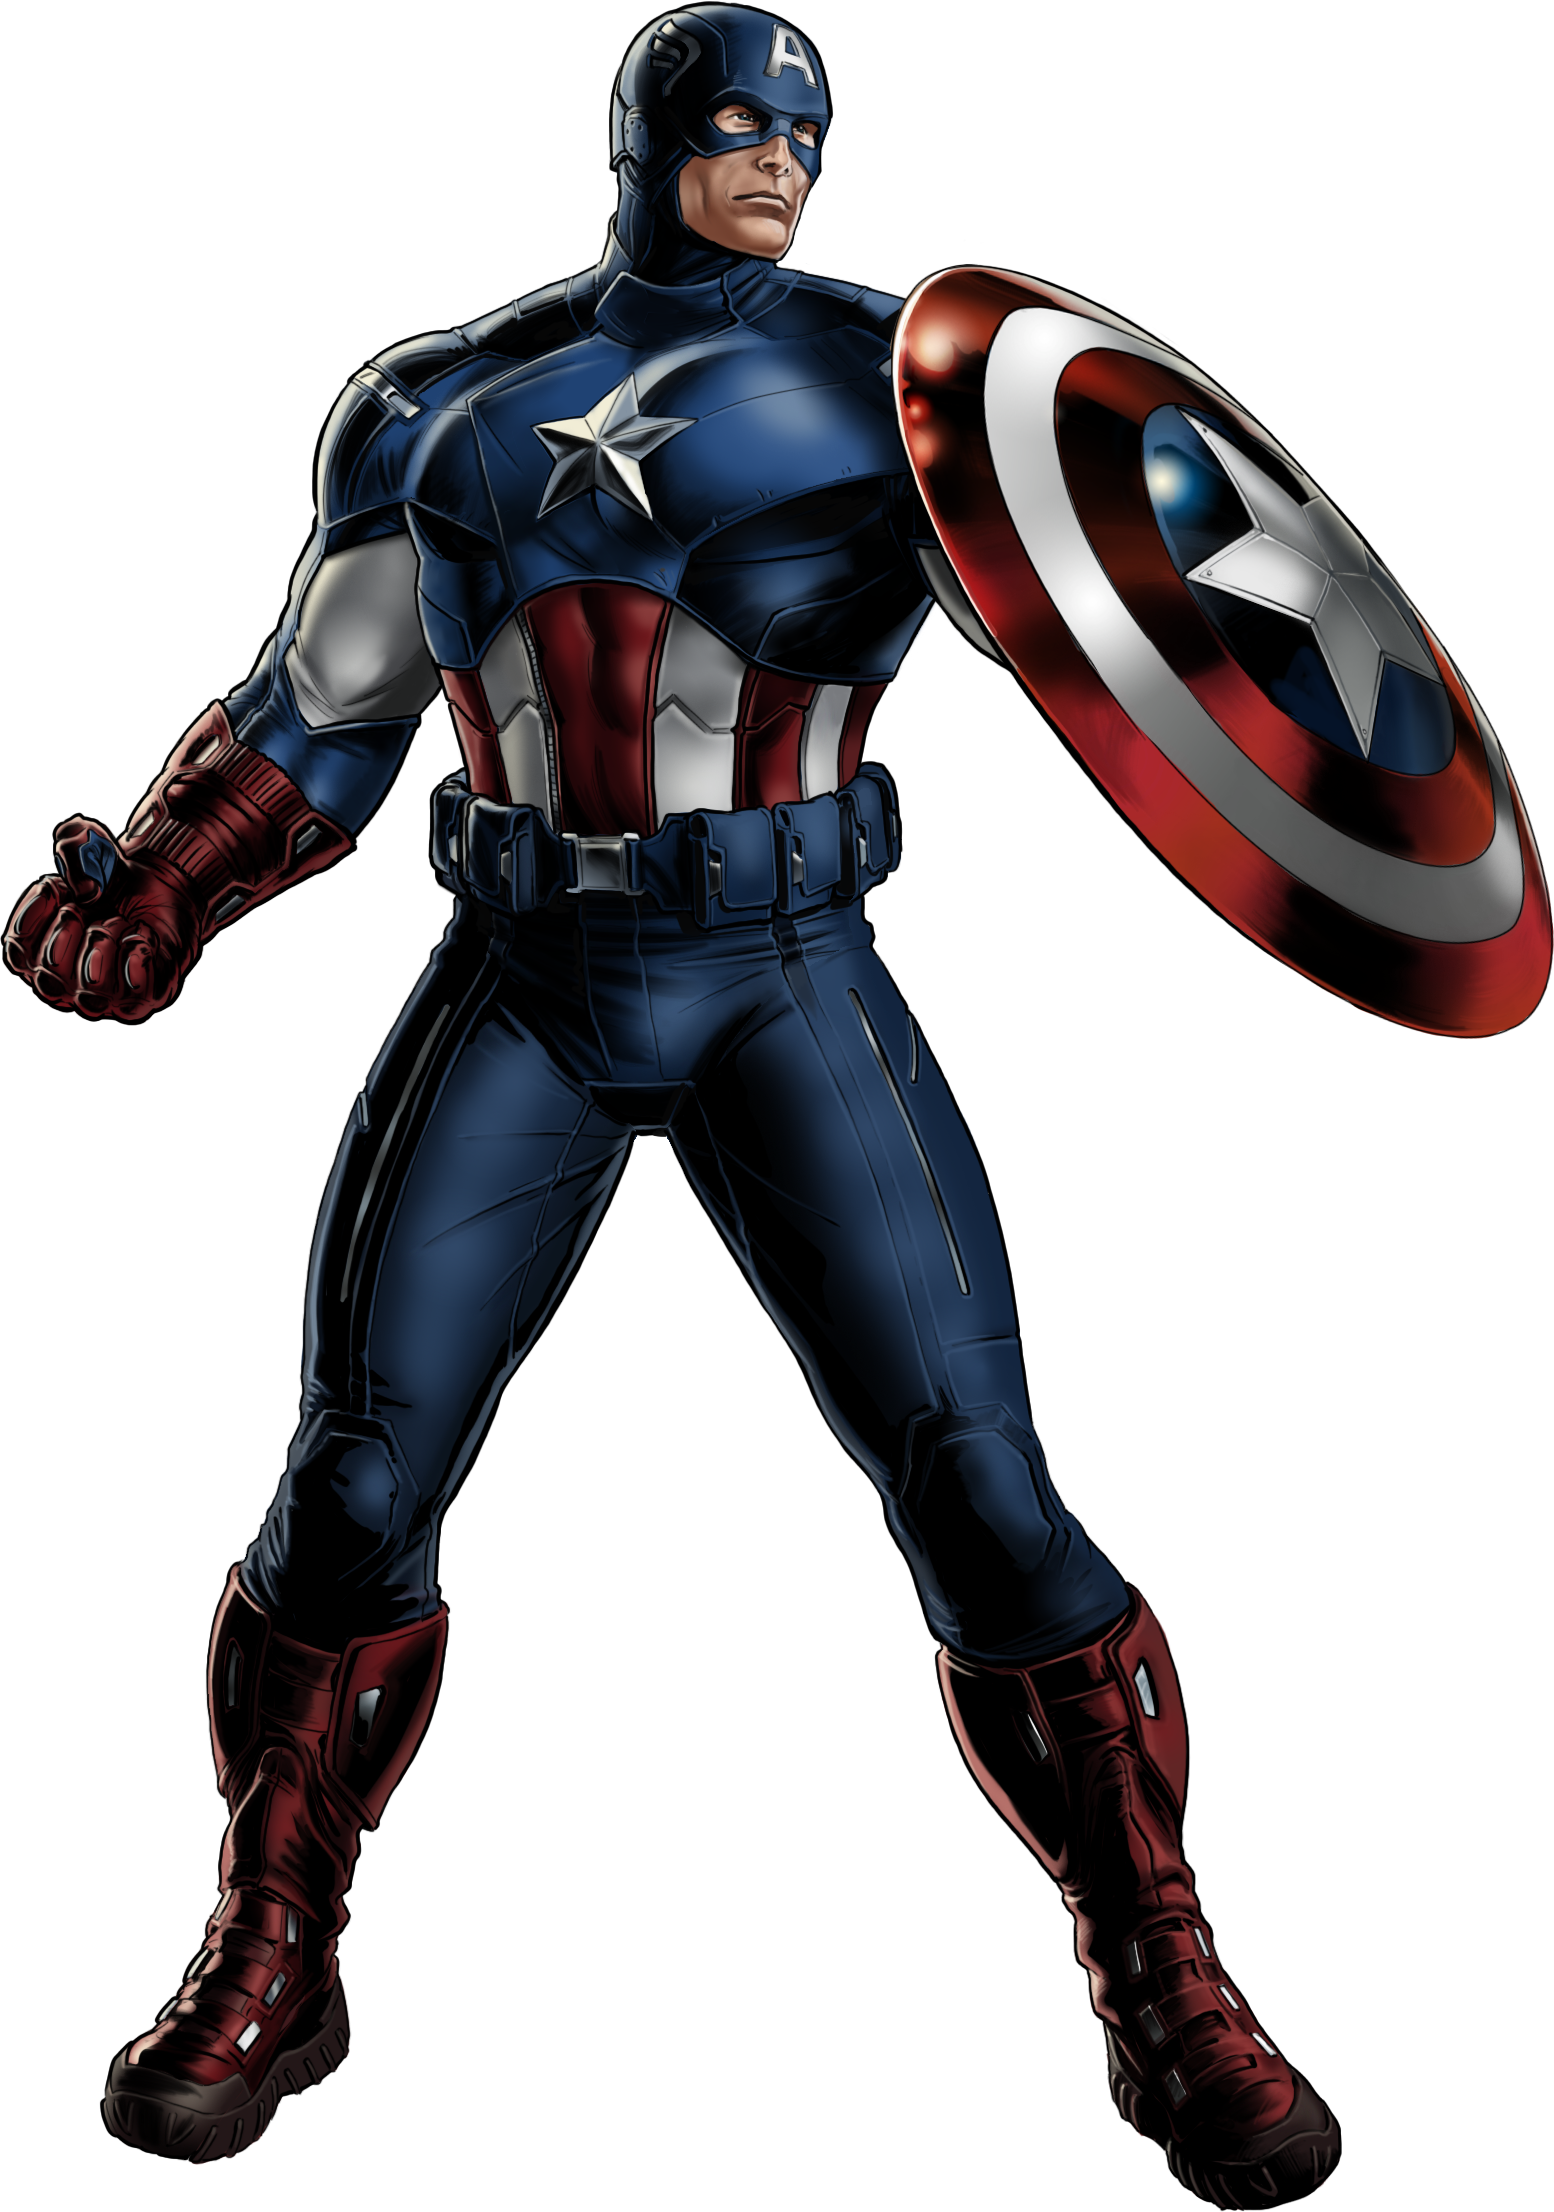 Image - Avengers Captain America Portrait Art.png | Marvel ...